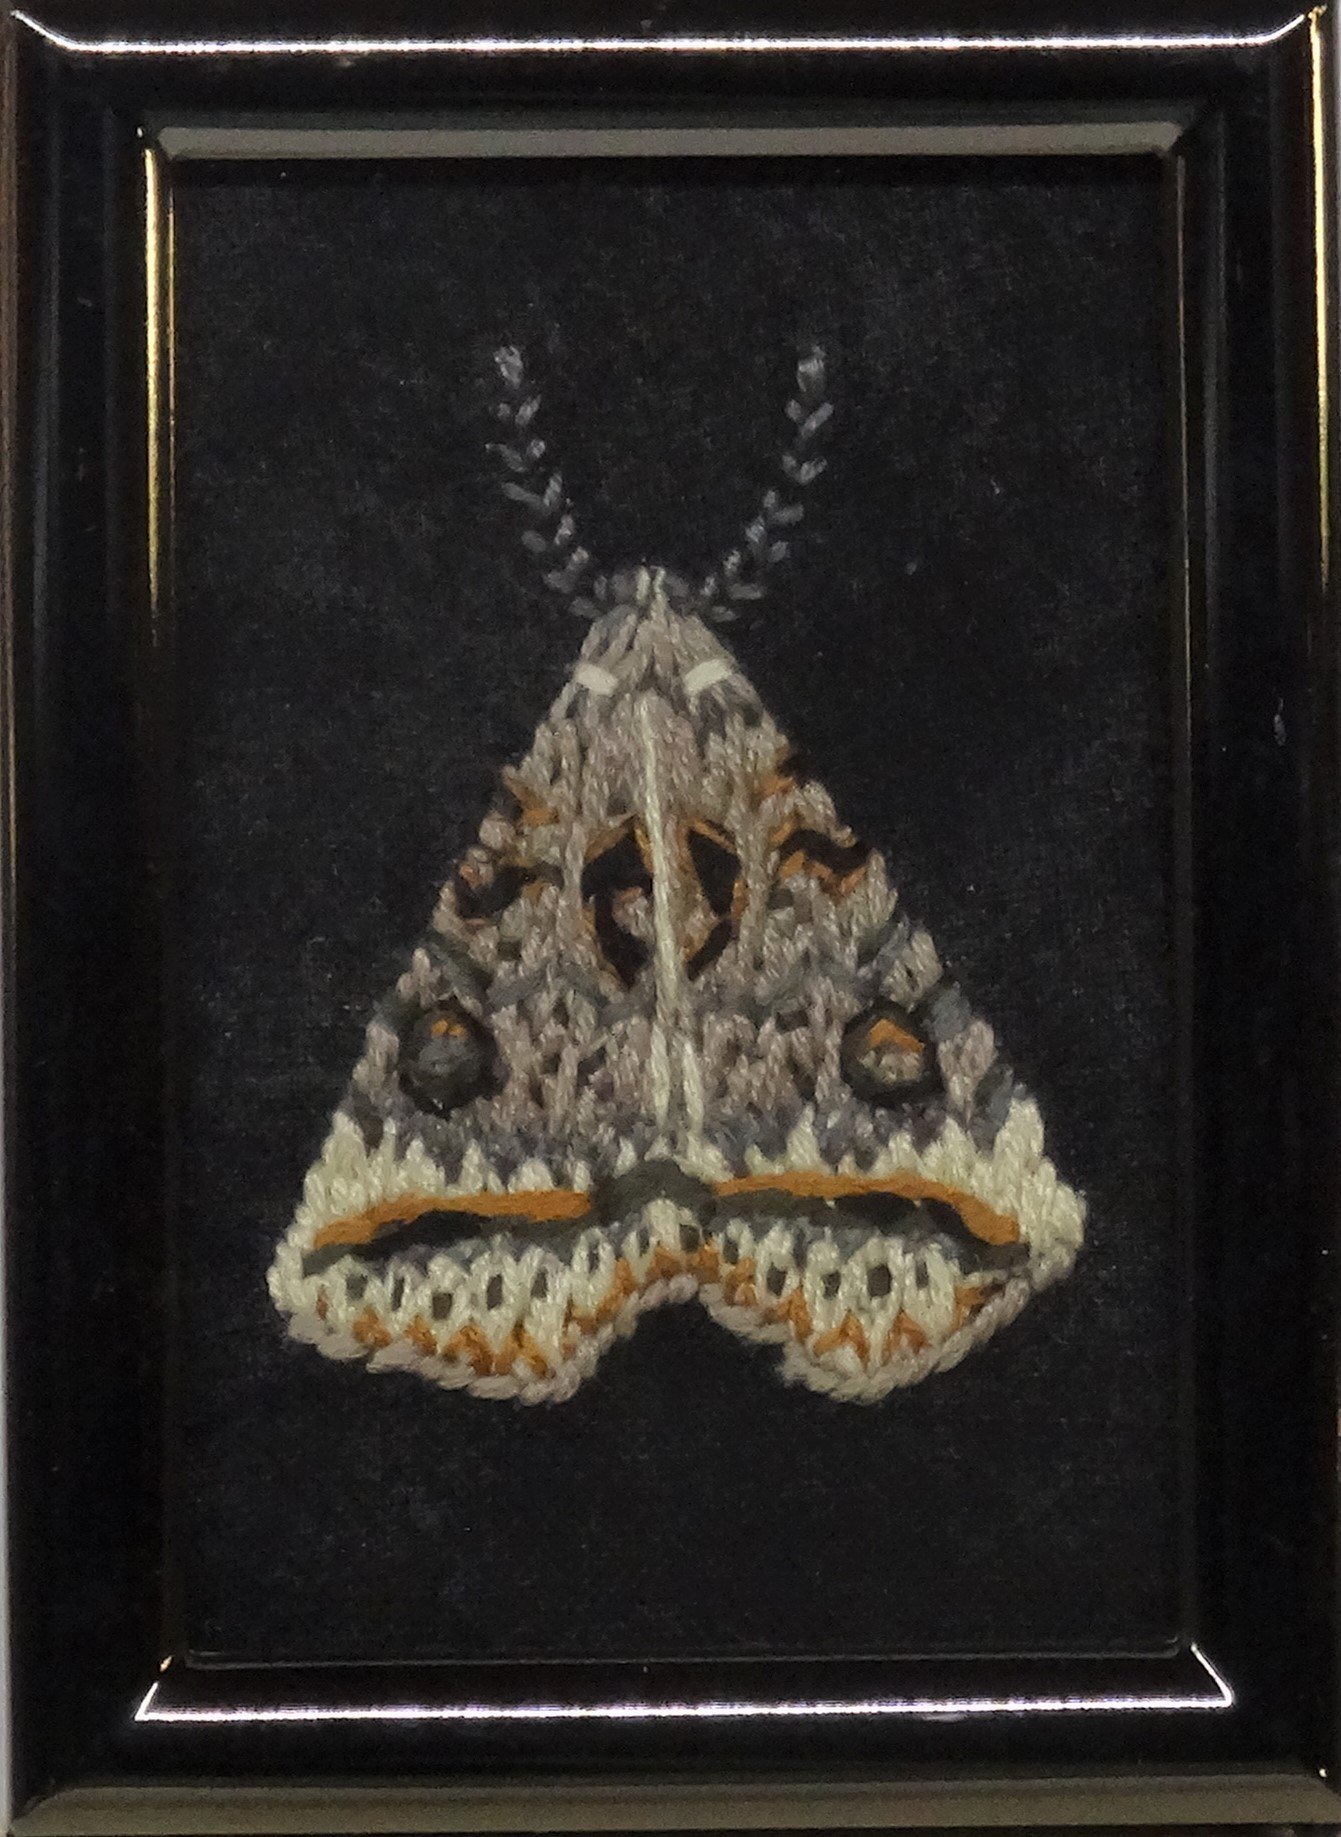 Black Bit Moth (Celiptera frustulum)